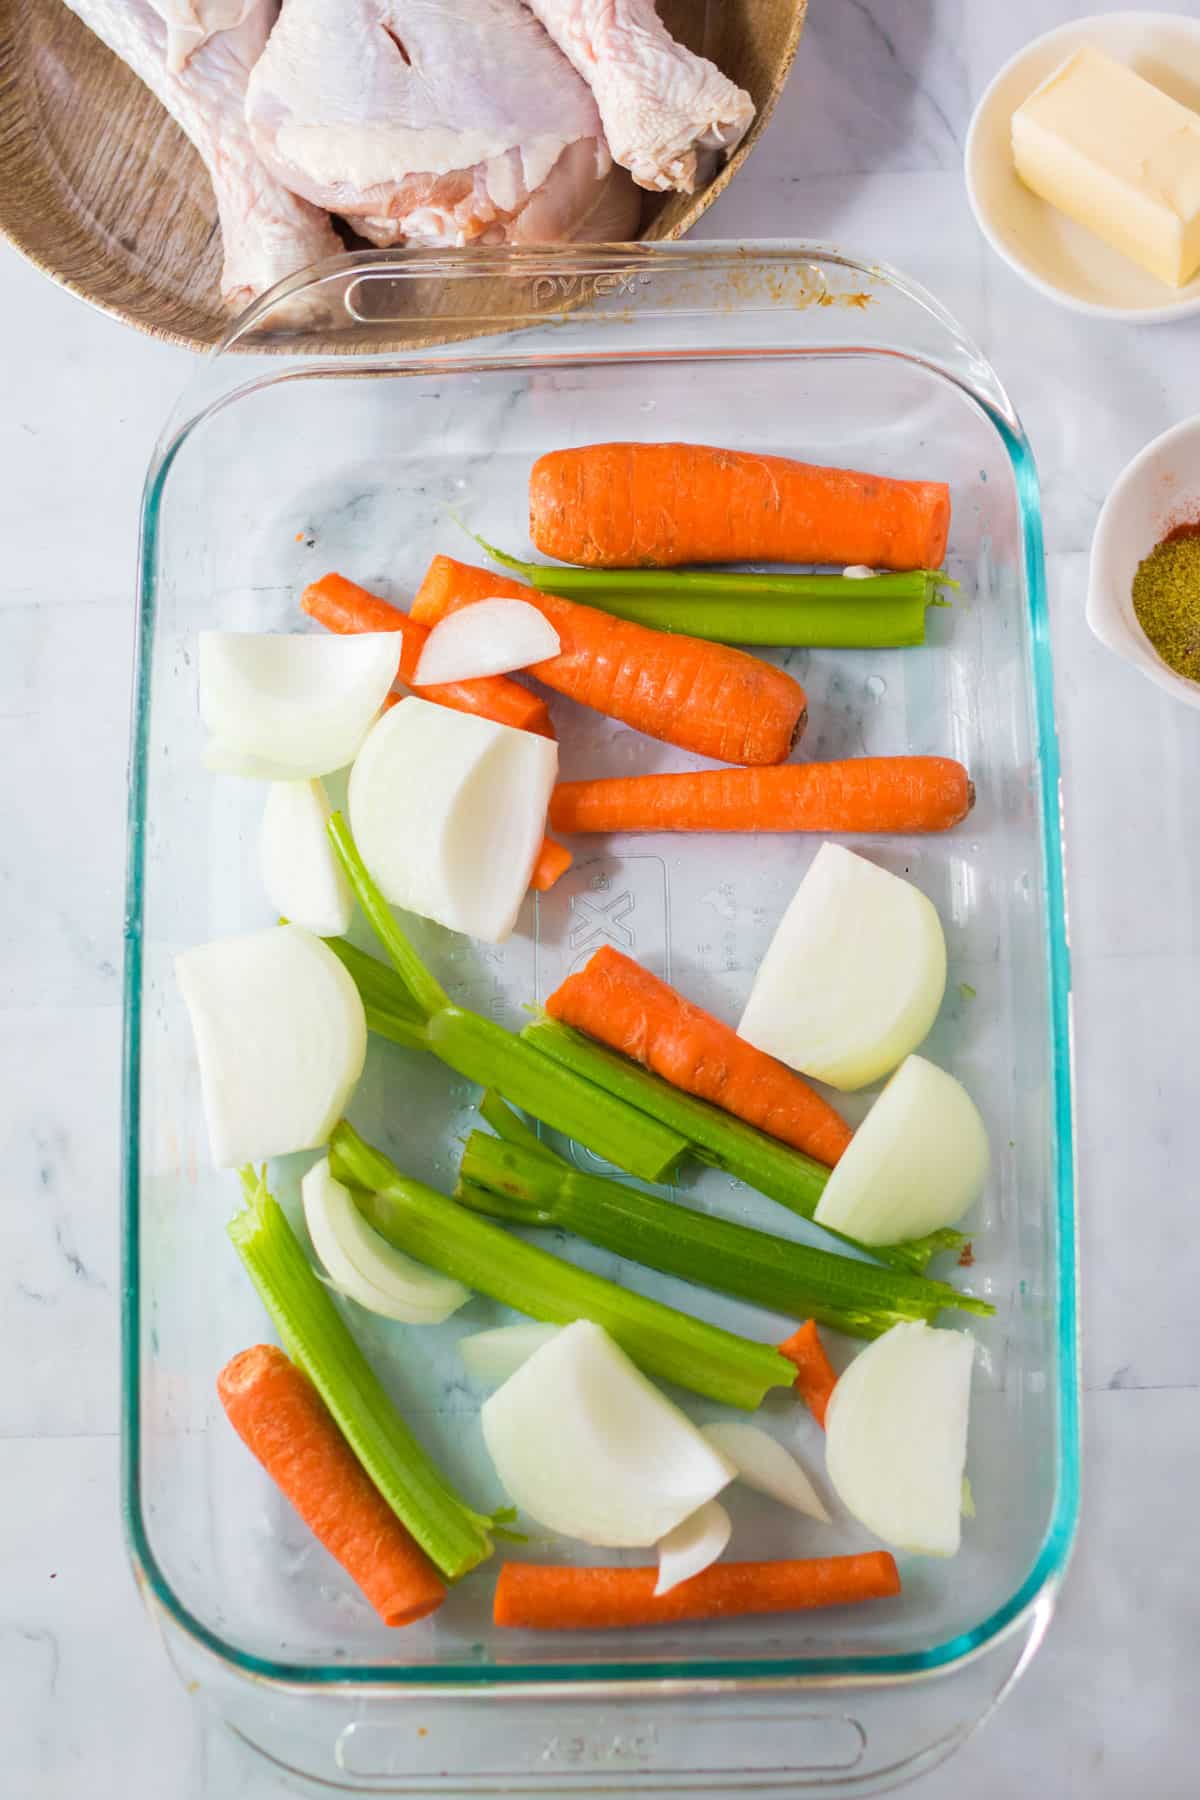 Vegetables on a tray for Turkey Gravy recipe